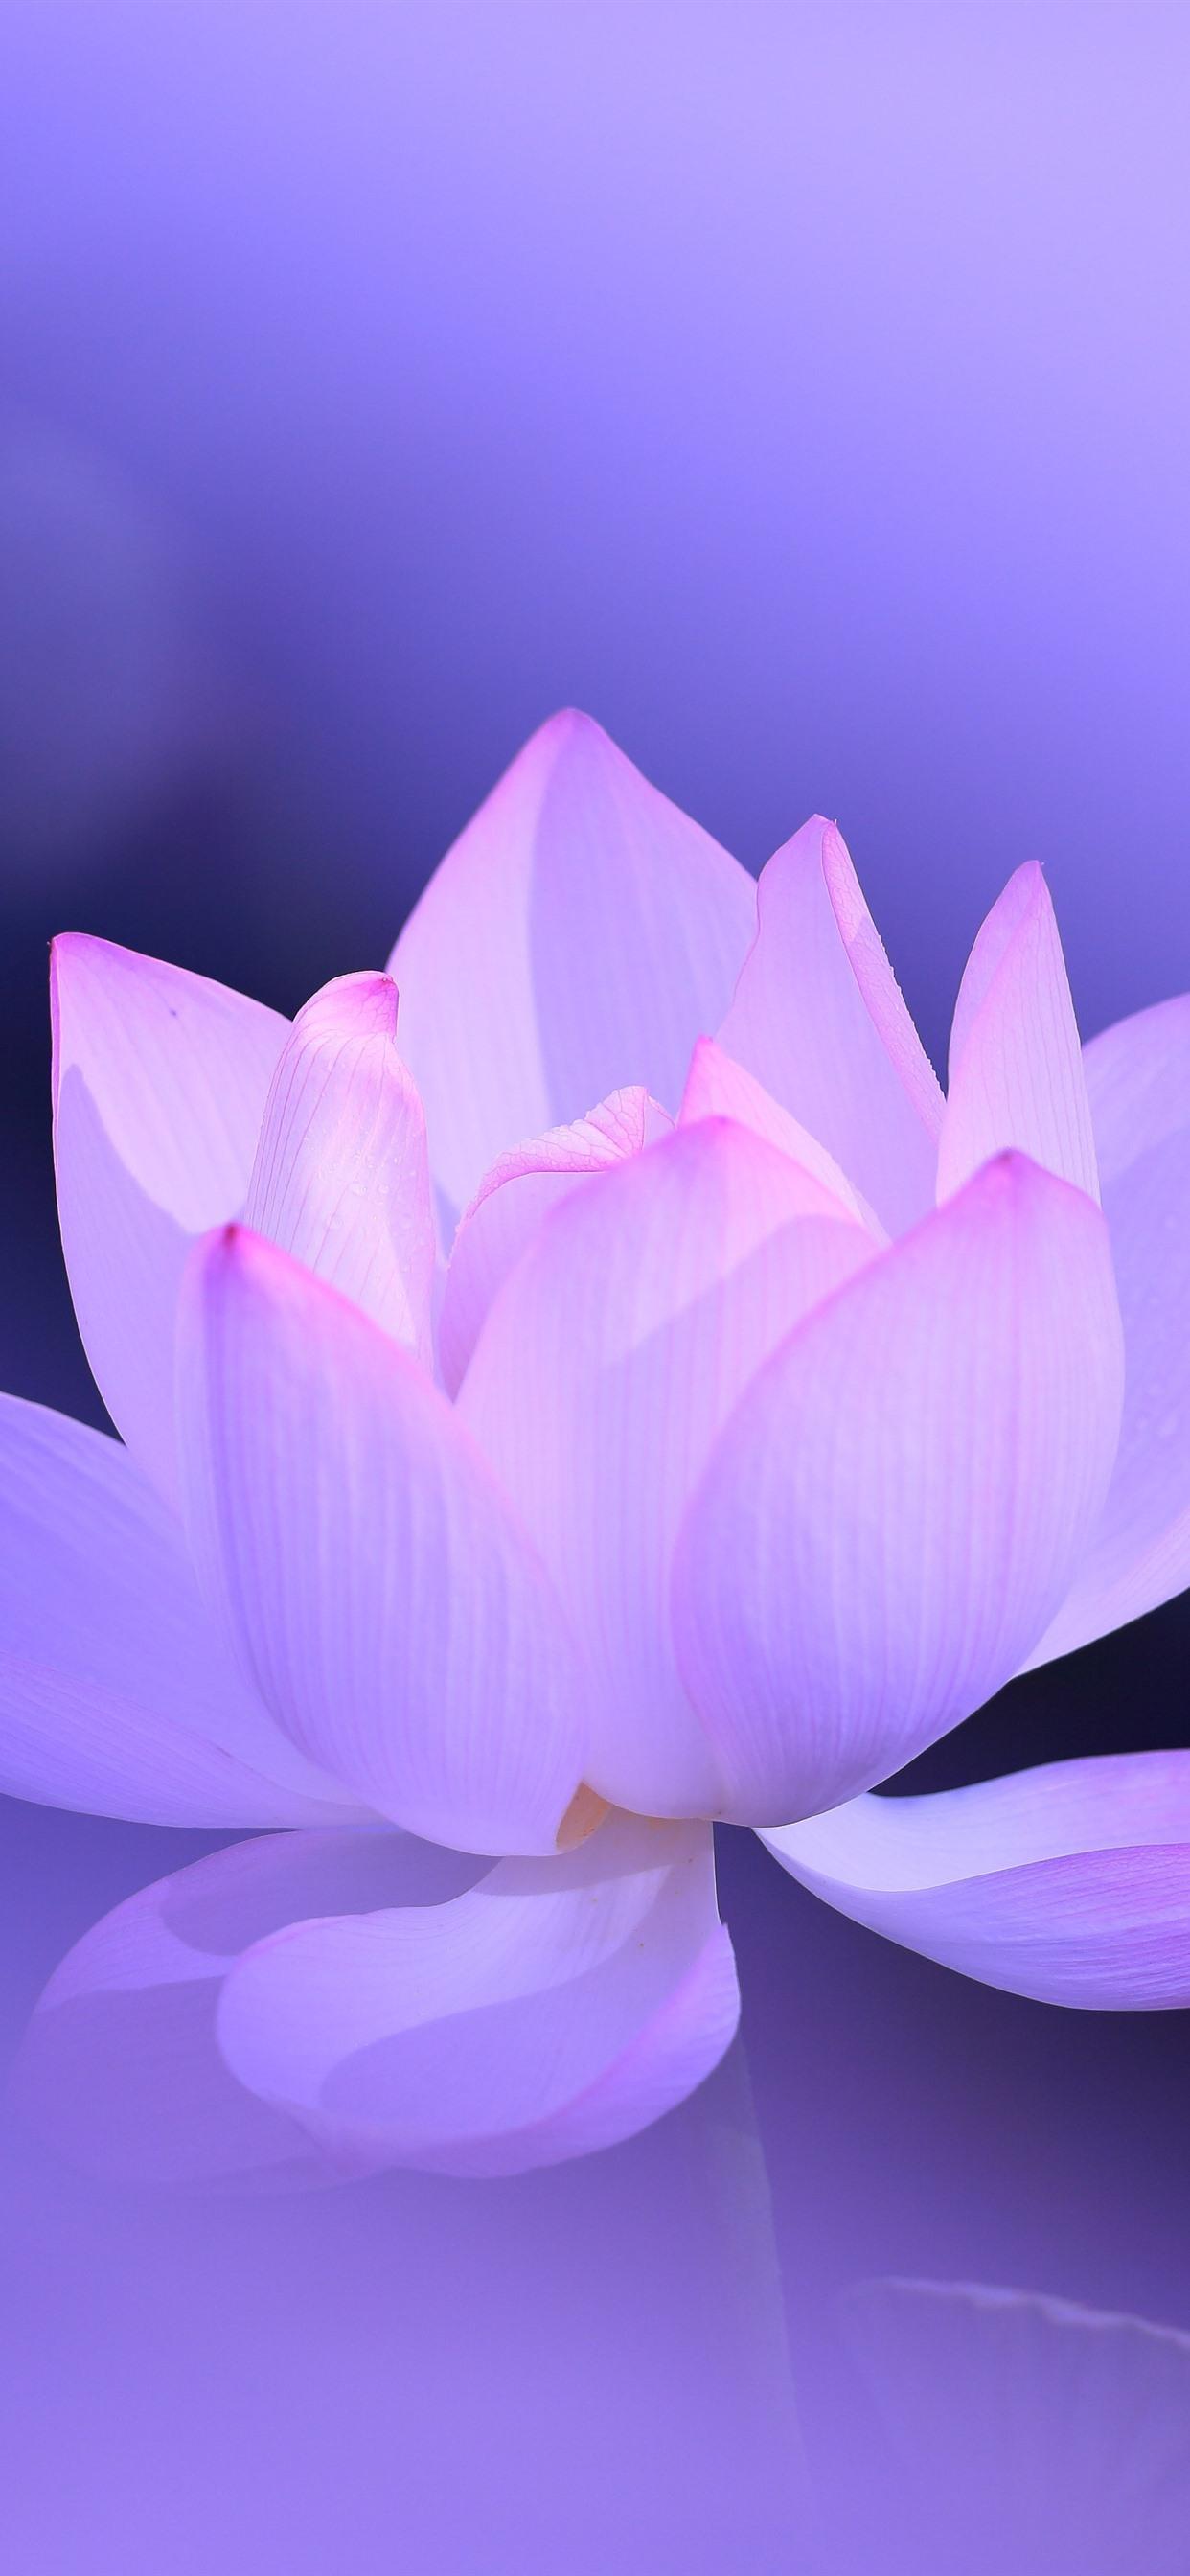 Pink lotus, petals, purple background, hazy, beautiful flower